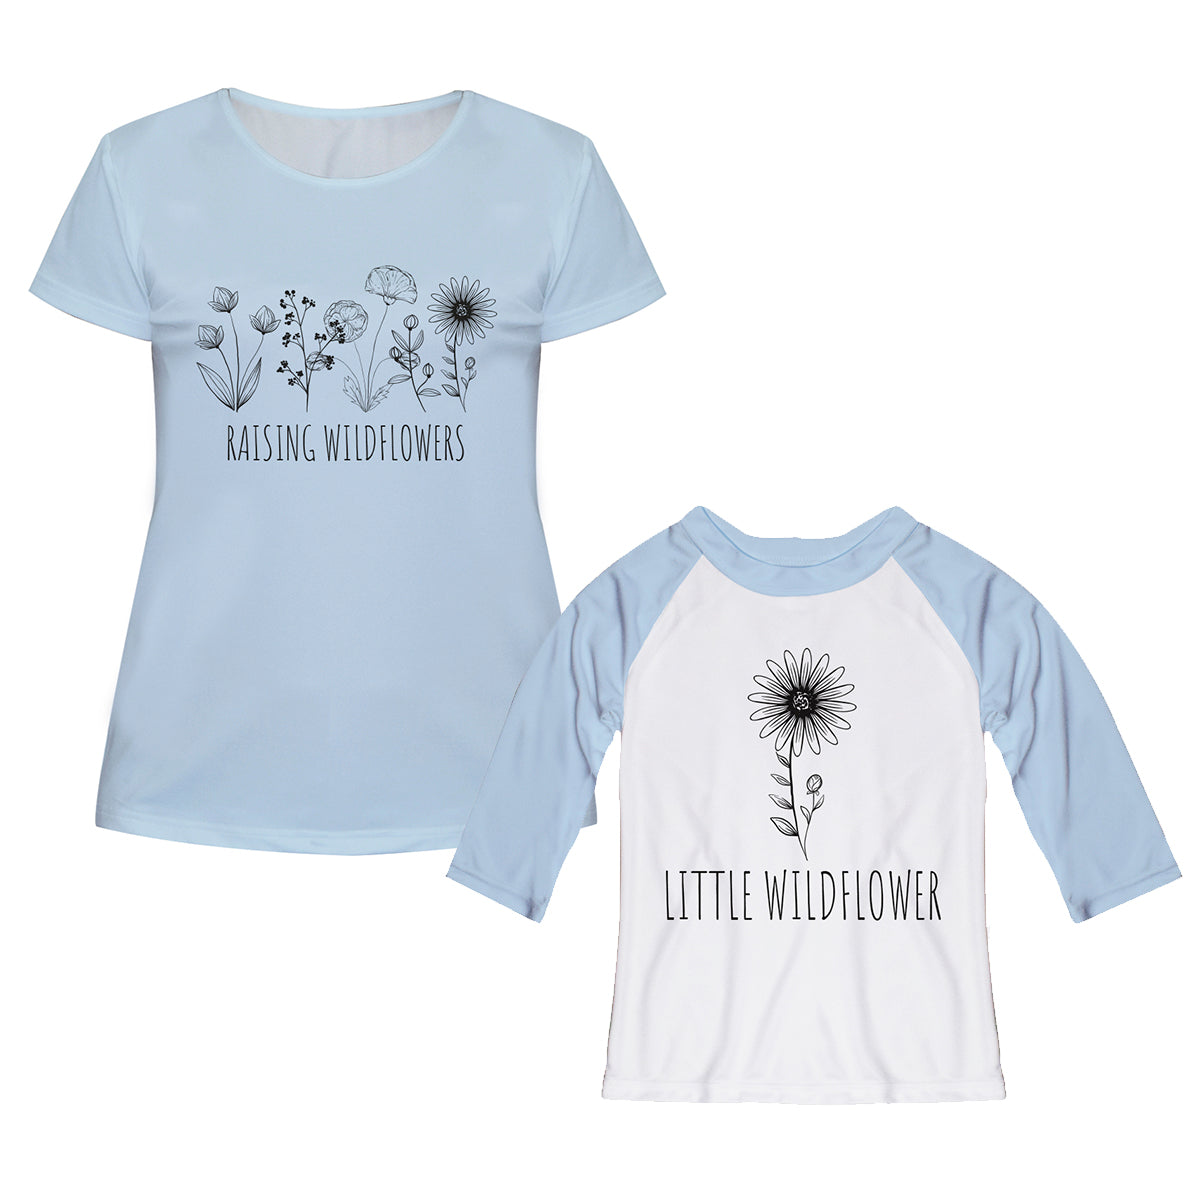 Raising Wildflowers Light Blue Short Sleeve Tee Shirt - Wimziy&Co.